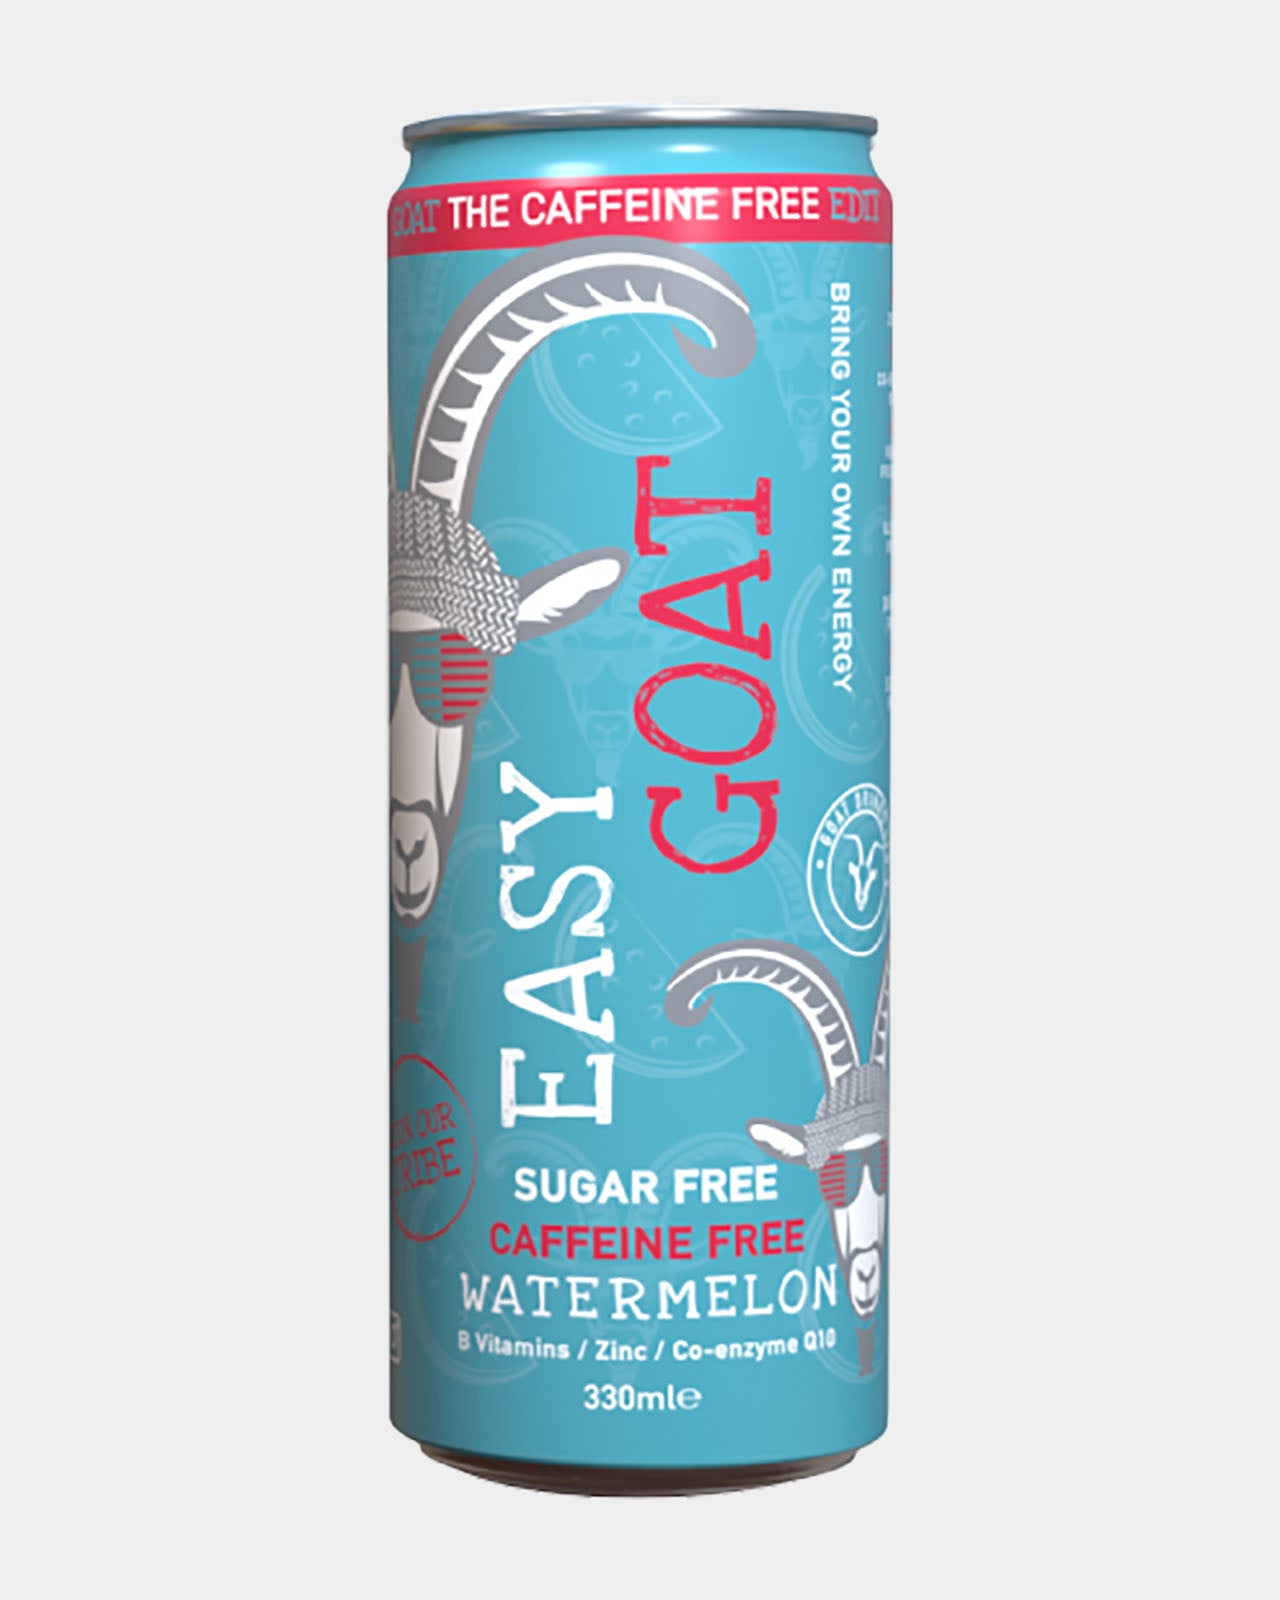 Easy Goat Caffeine Free Functional Energy Drink - Watermelon